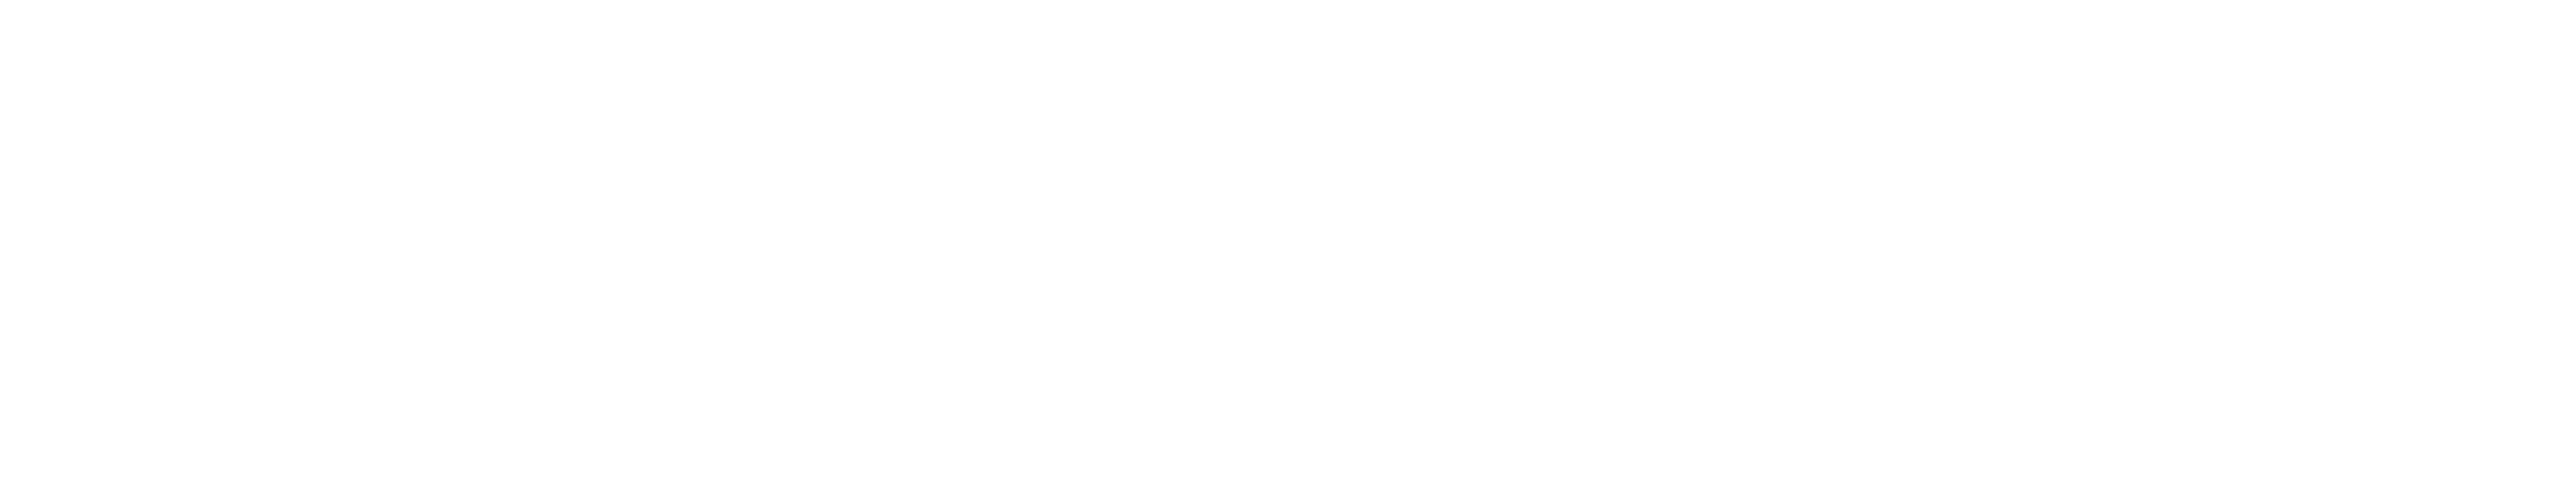 Bren School logo